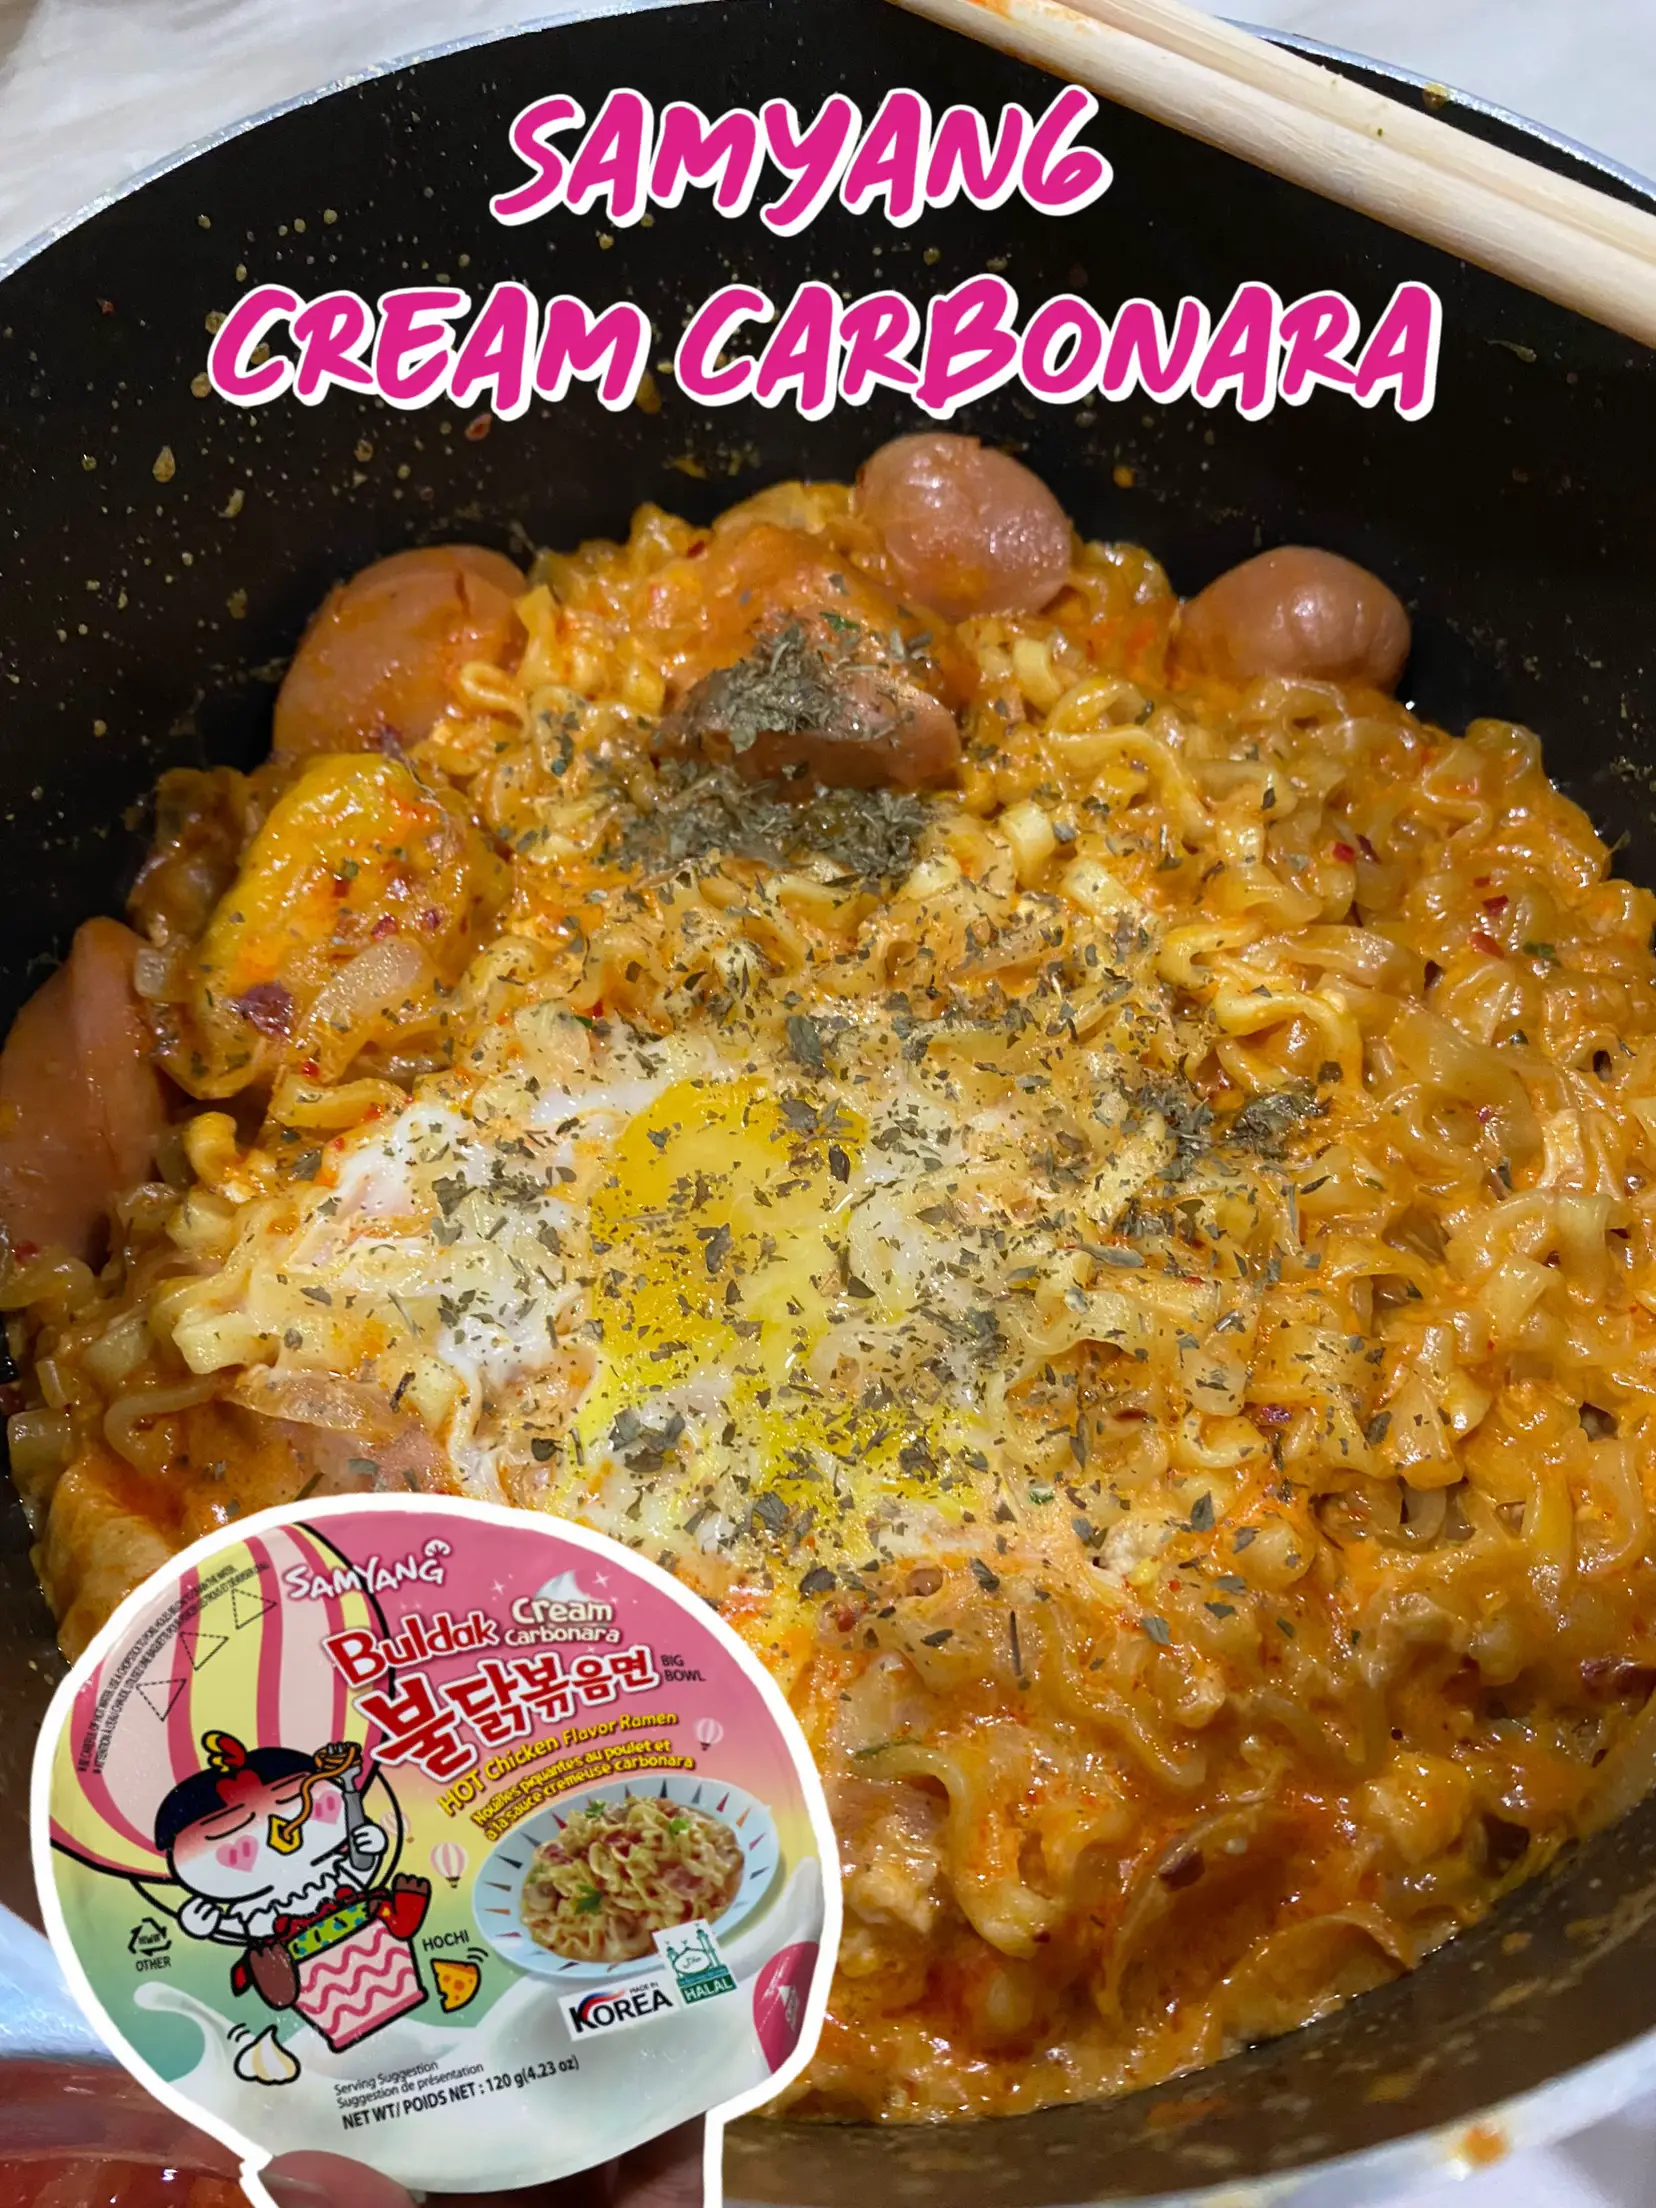 HOMEMADE] Buldak carbonara with mozzarella and steak : r/food